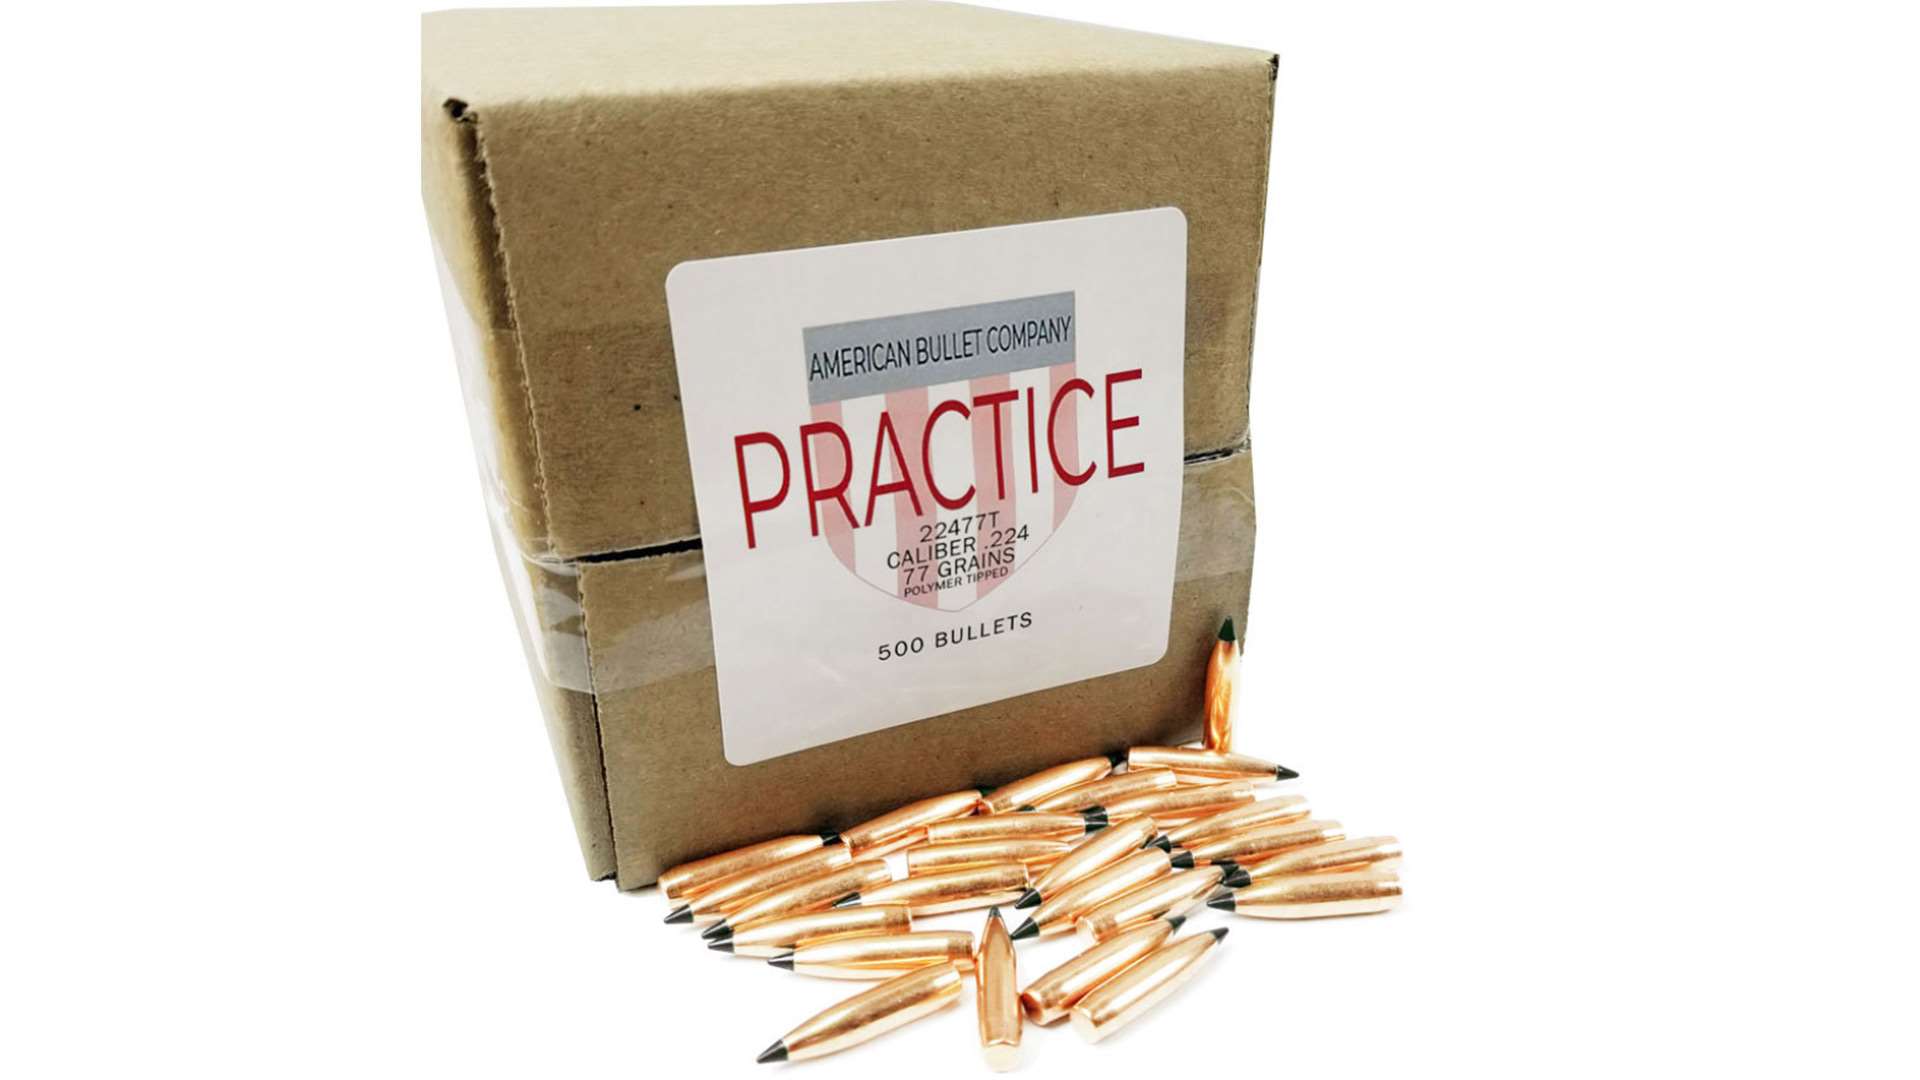 American Bullet Company Practice Bullets